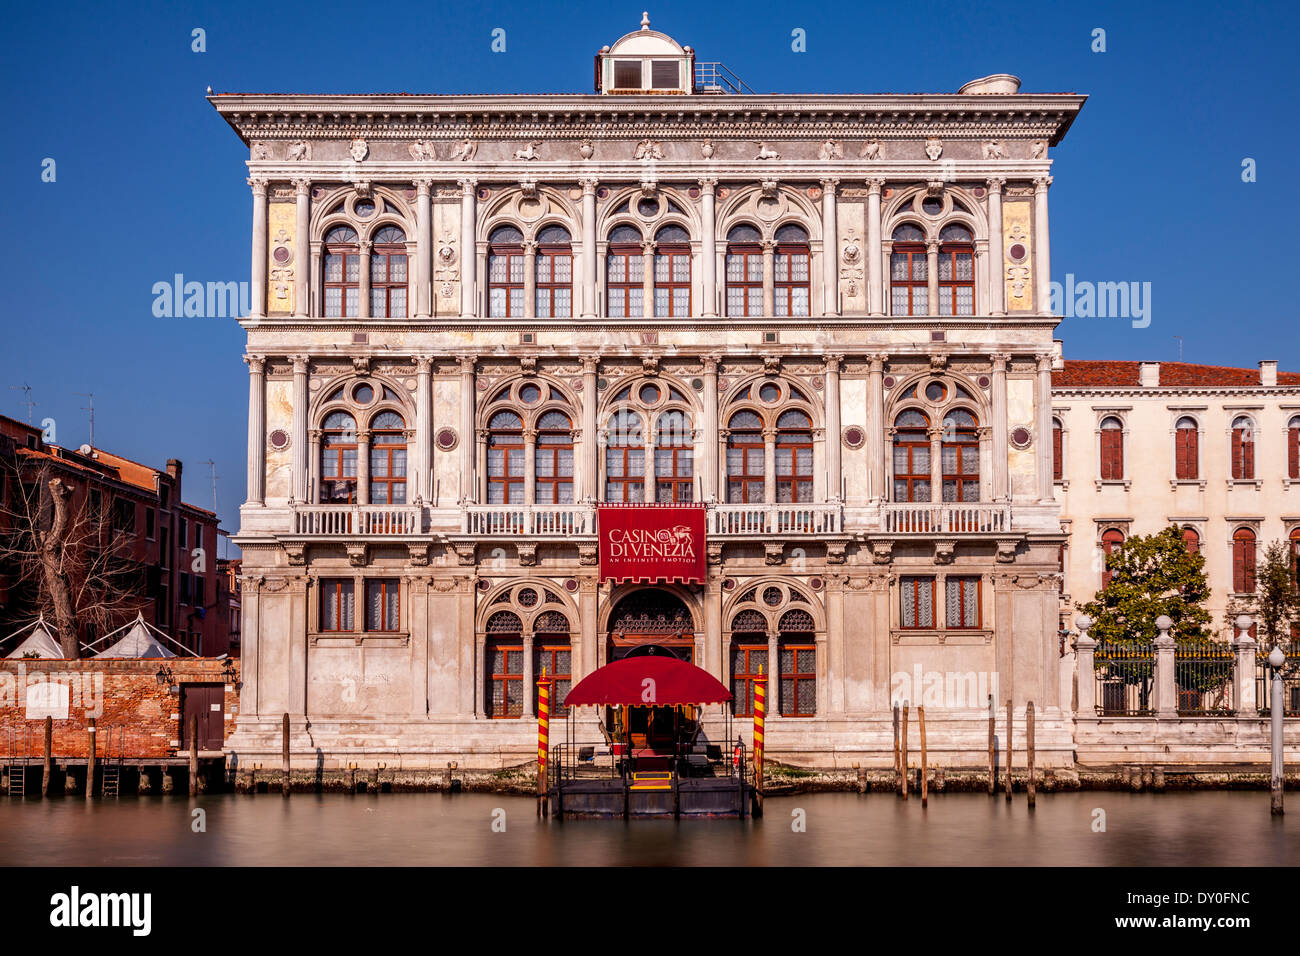 Casino di venezia hi-res stock photography and images - Alamy